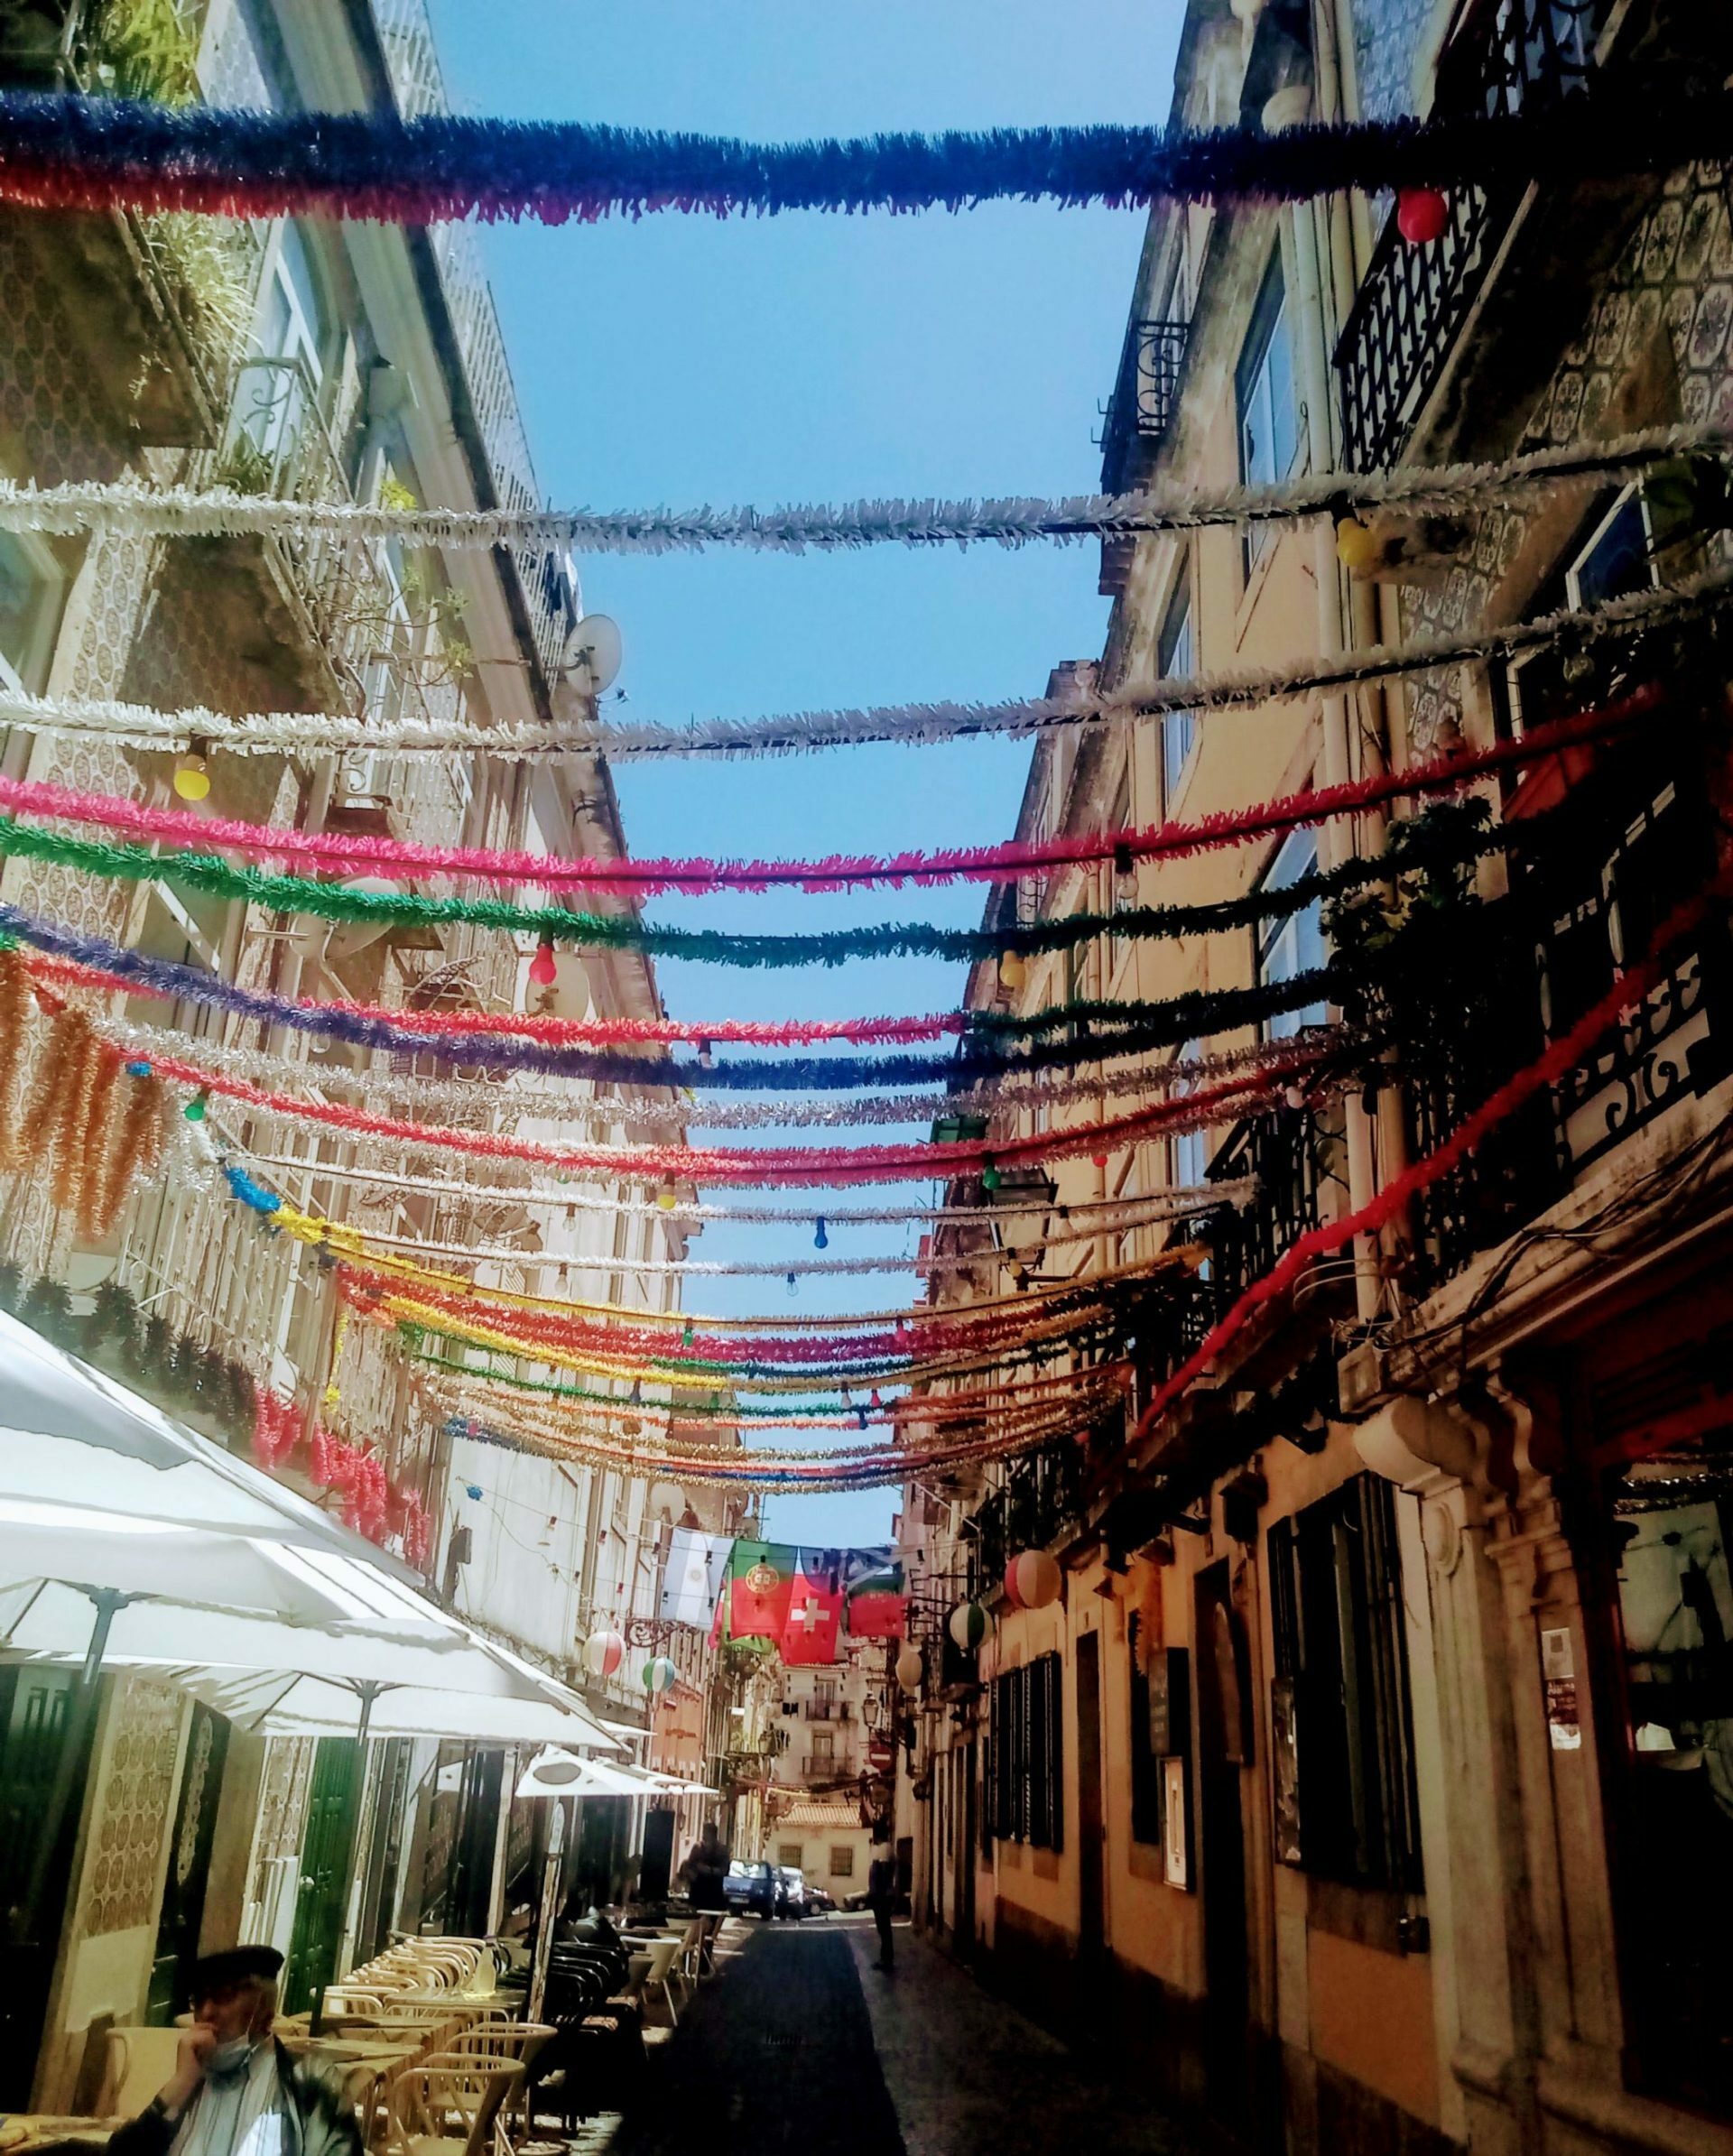 The empy street of Bairro Alto.